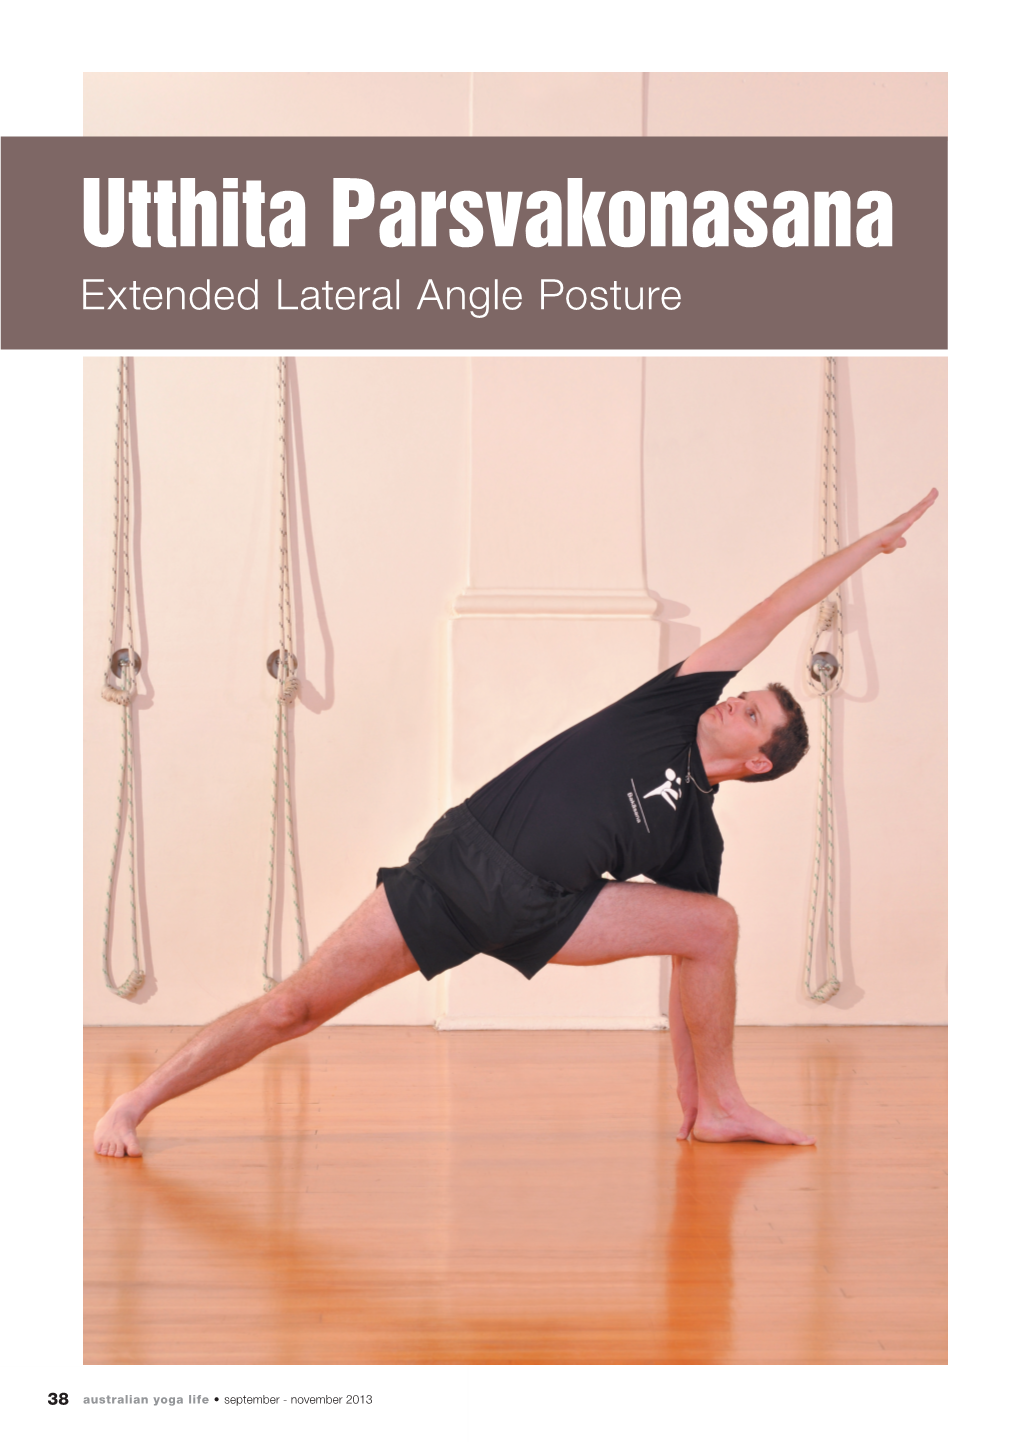 Utthita Parsvakonasana Extended Lateral Angle Posture